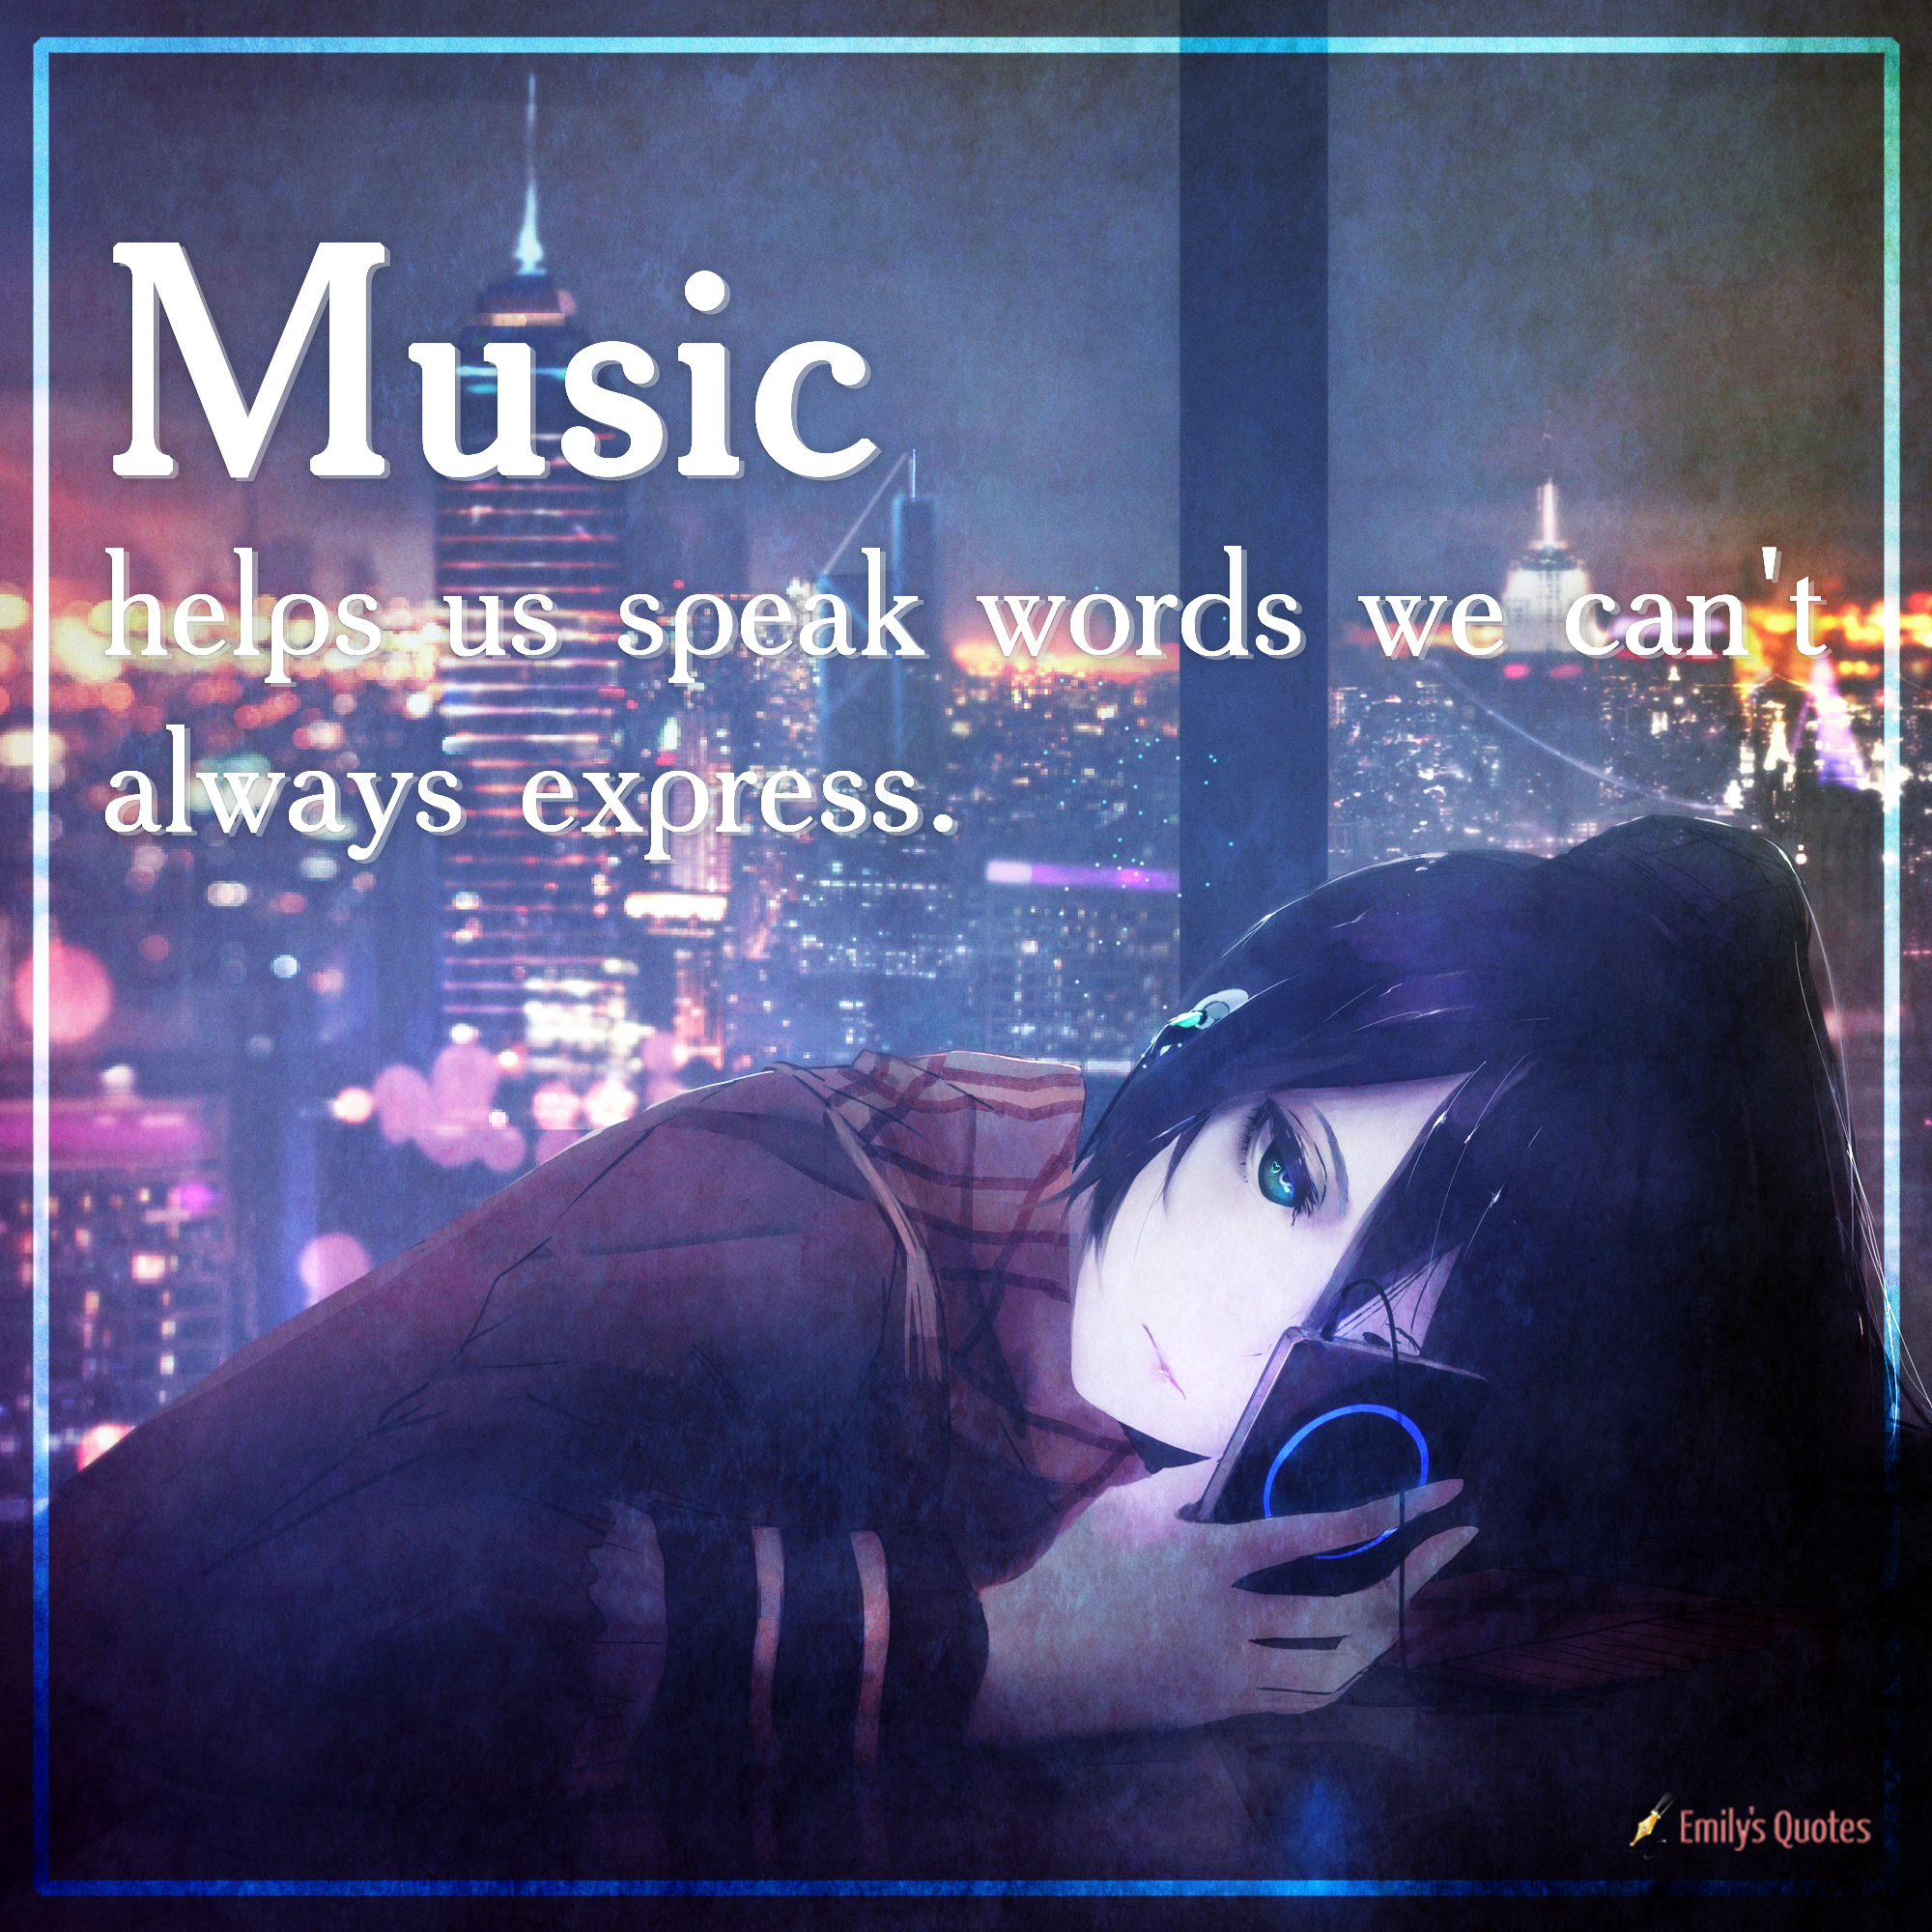 Music helps us speak words we can’t always express